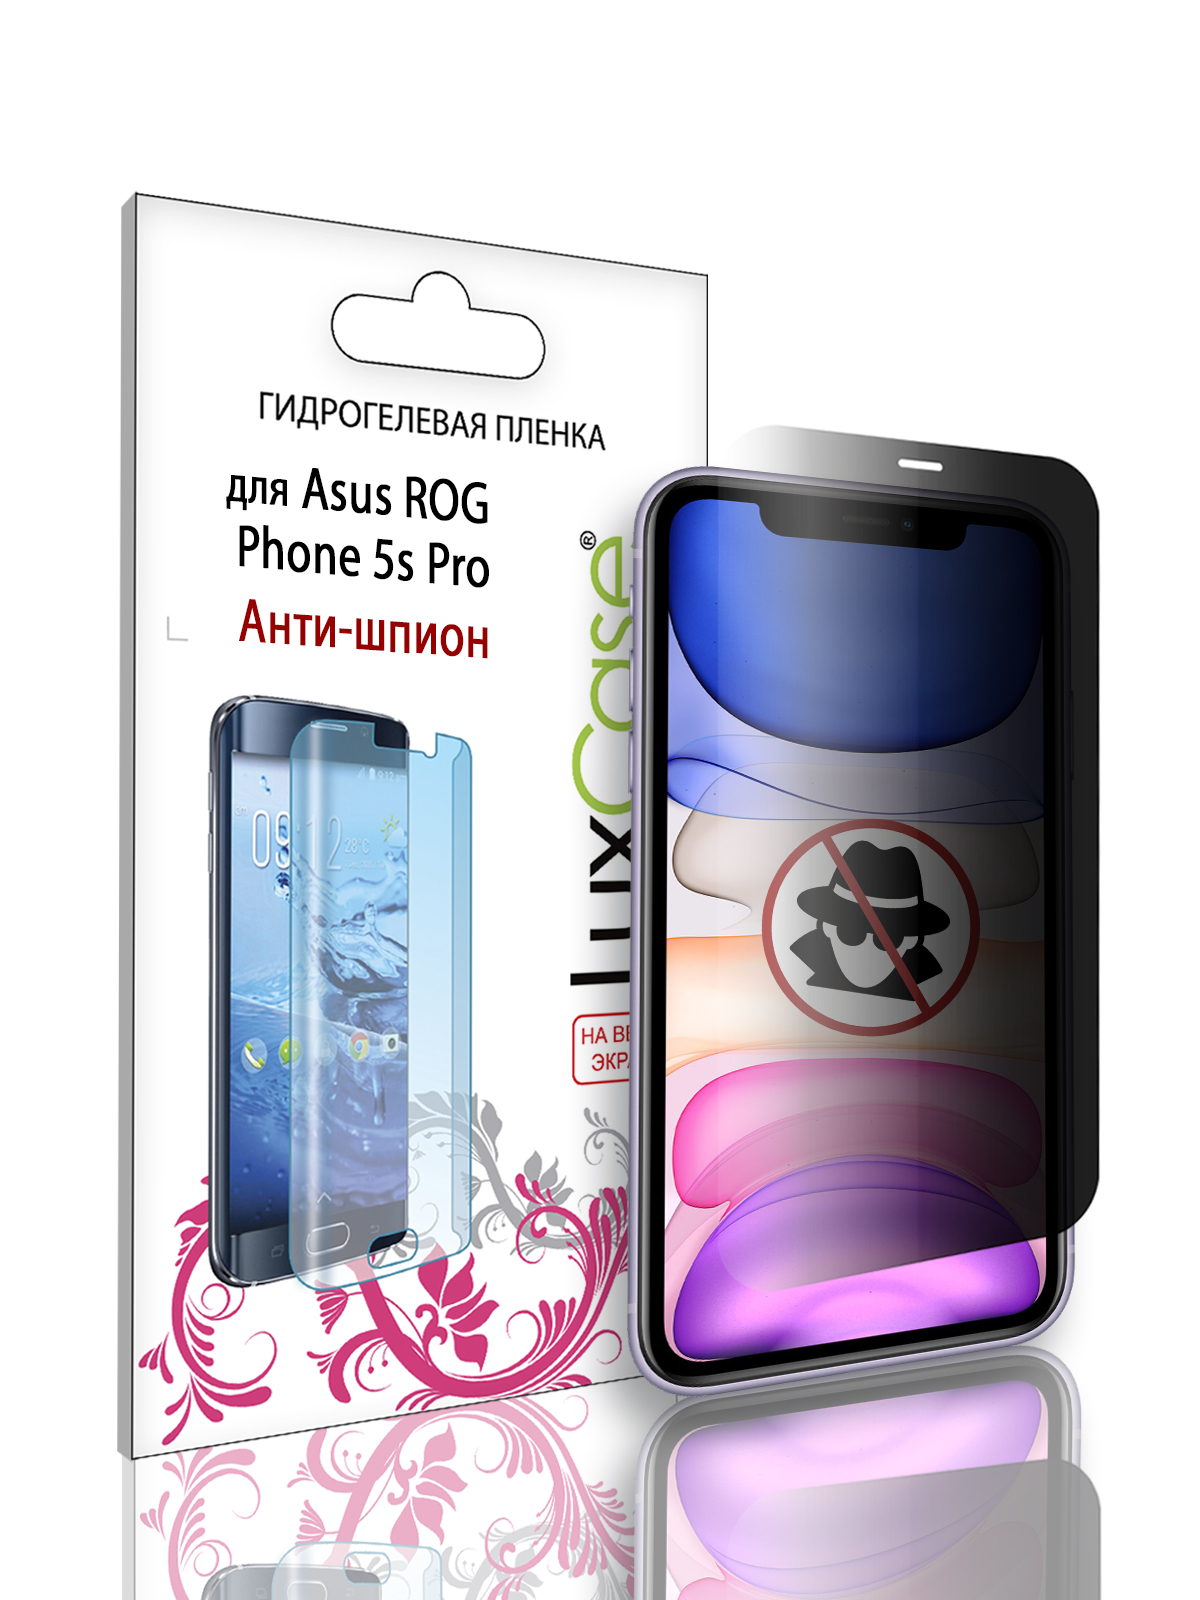 Гидрогелевая пленка LuxCase для Asus ROG Phone 5s Pro, Антишпион, 0,14 мм, Front гидрогелевая защитная пленка антишпион anty spy анти шпион для infinix zero x матовая